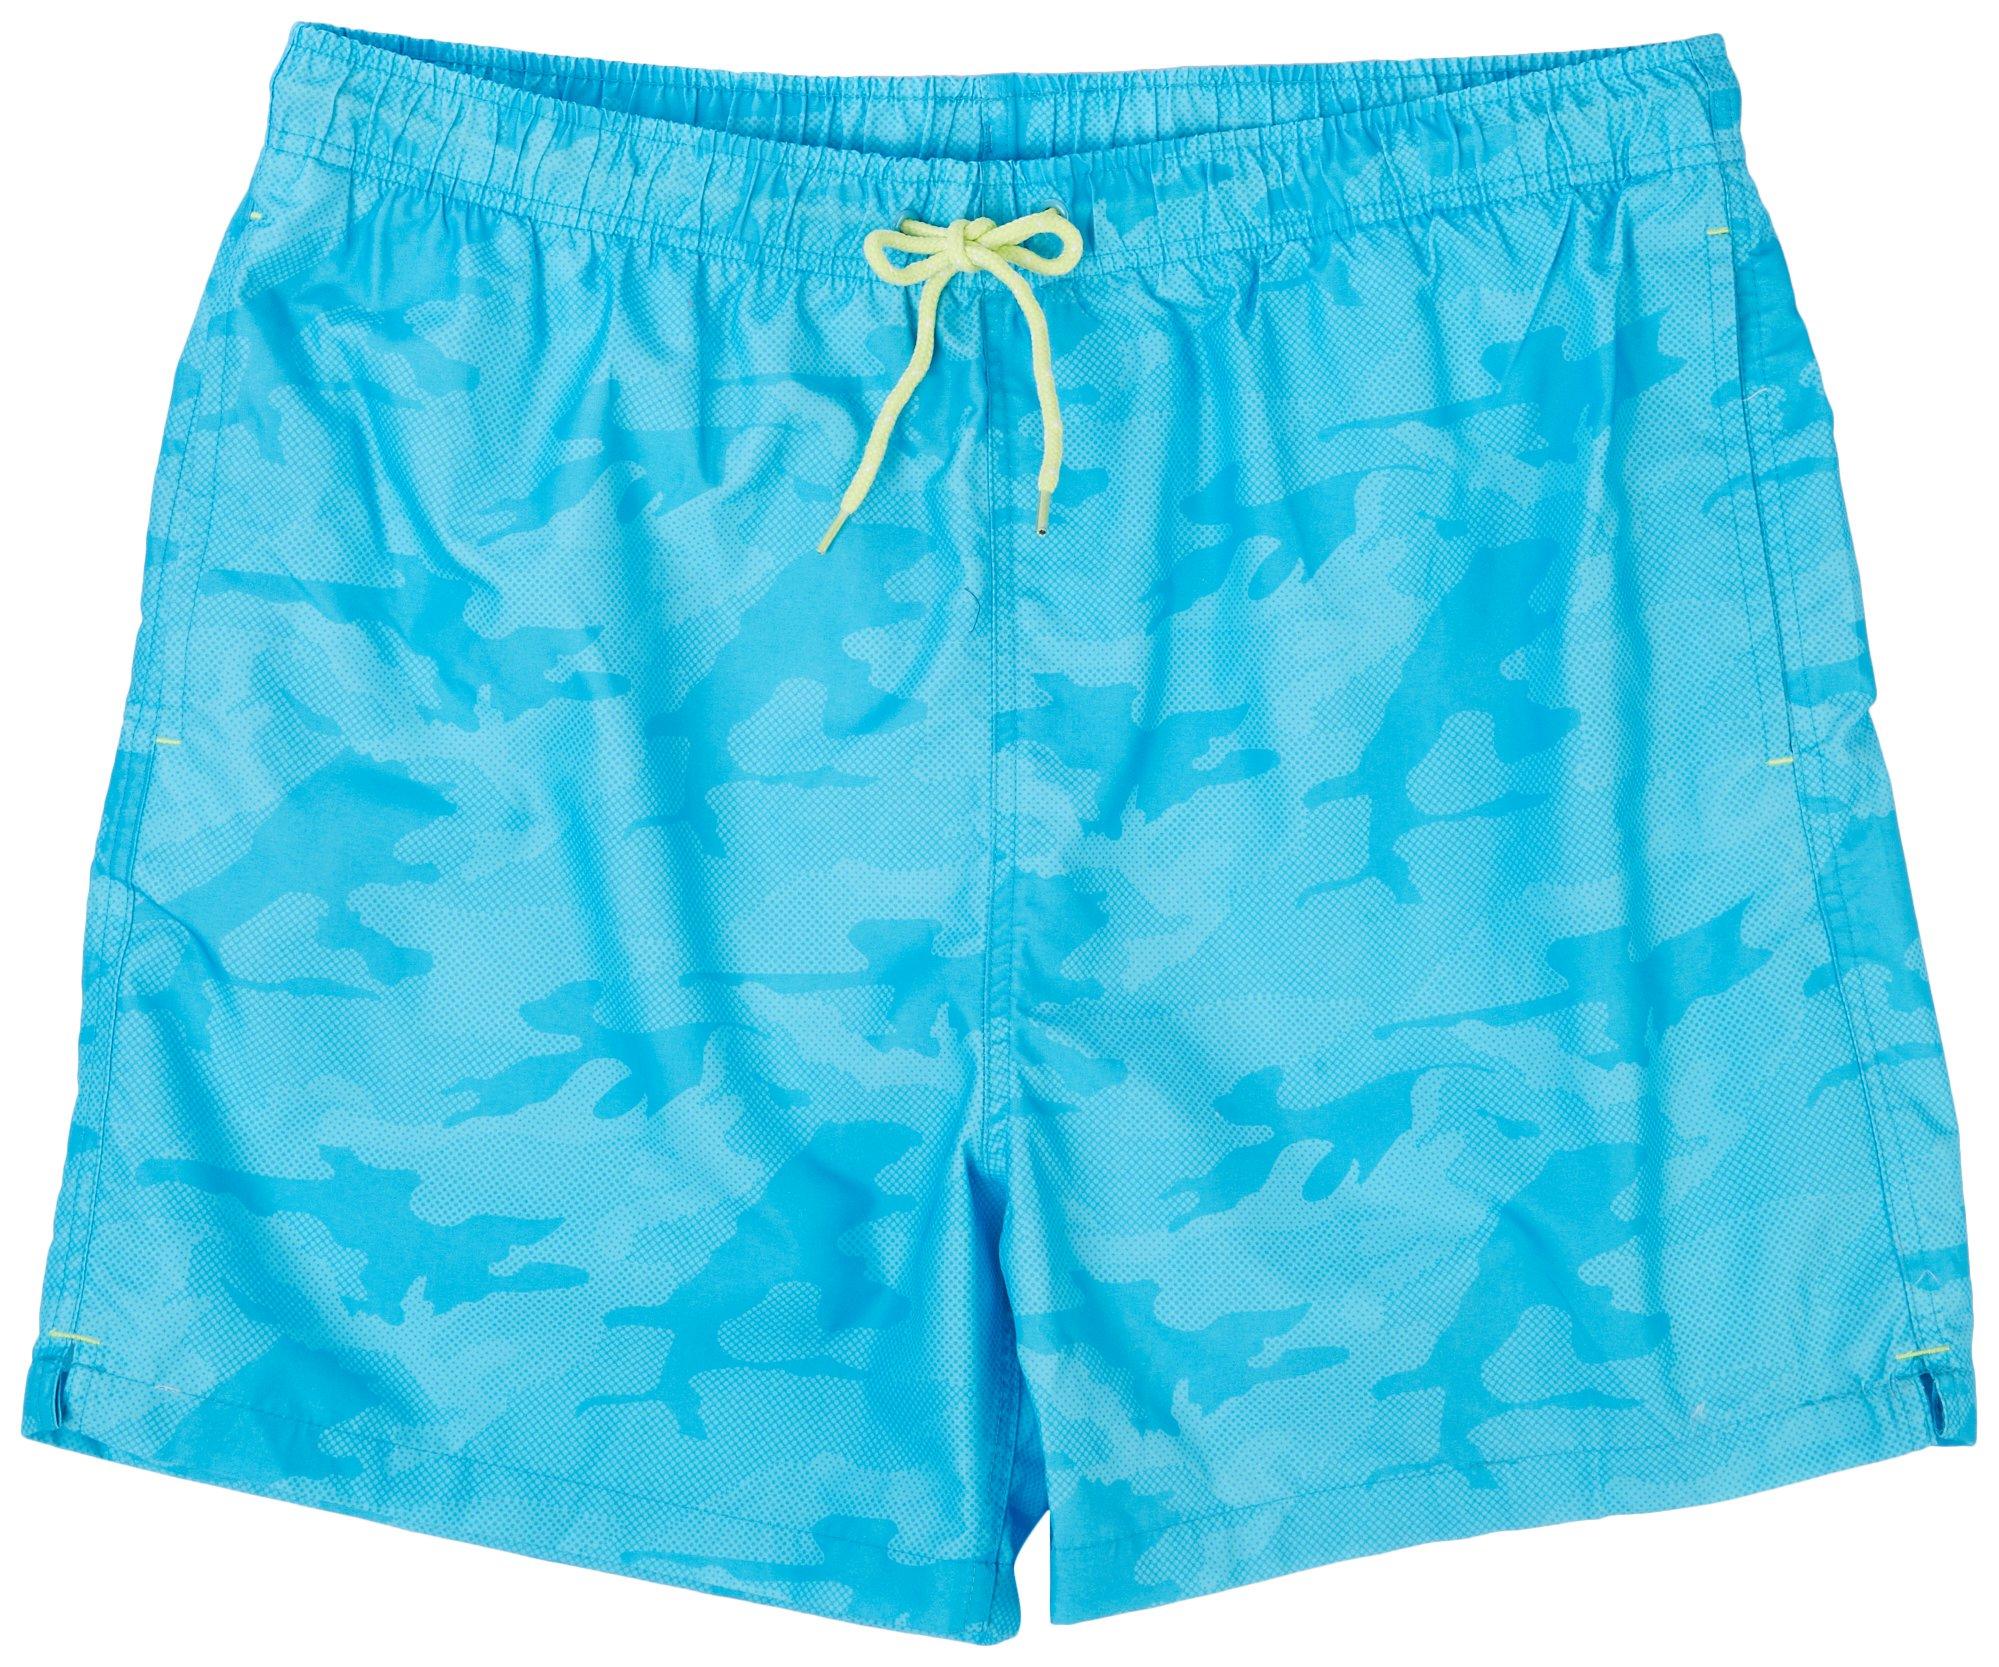 Laguna Mens 6 in. 2-in-1 Brief Camo Dot Swim Shorts